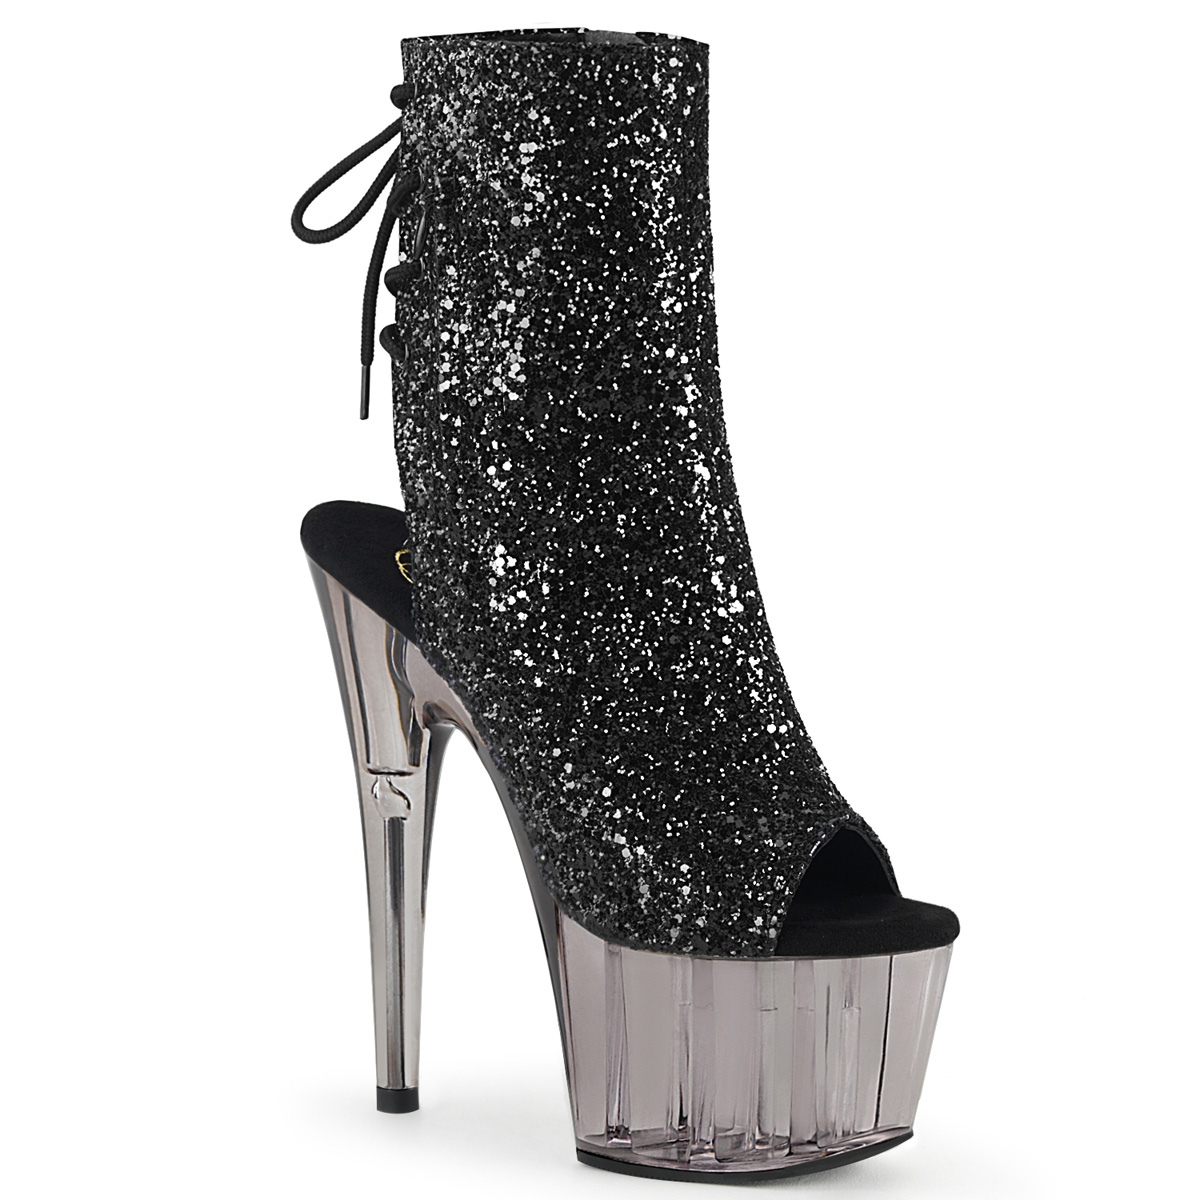 Ladies Black Glitter High Heels With Bow- Size 8 | eBay